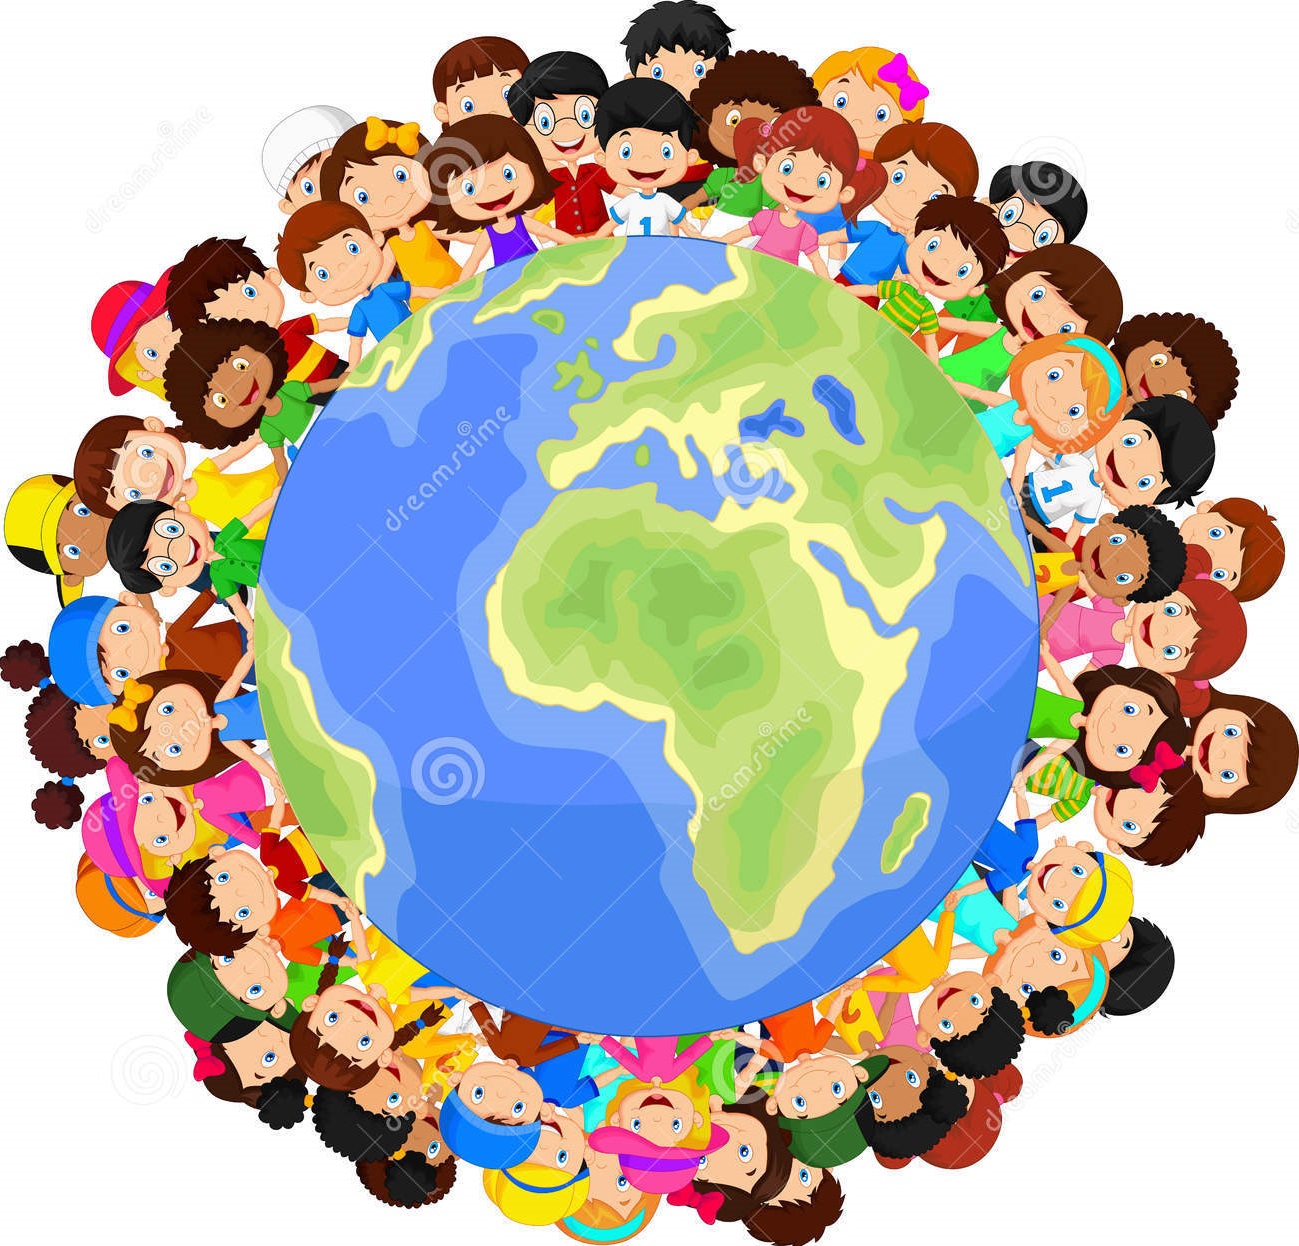 multicultural-children-cartoon-planet-earth-illustration-49366605.jpg